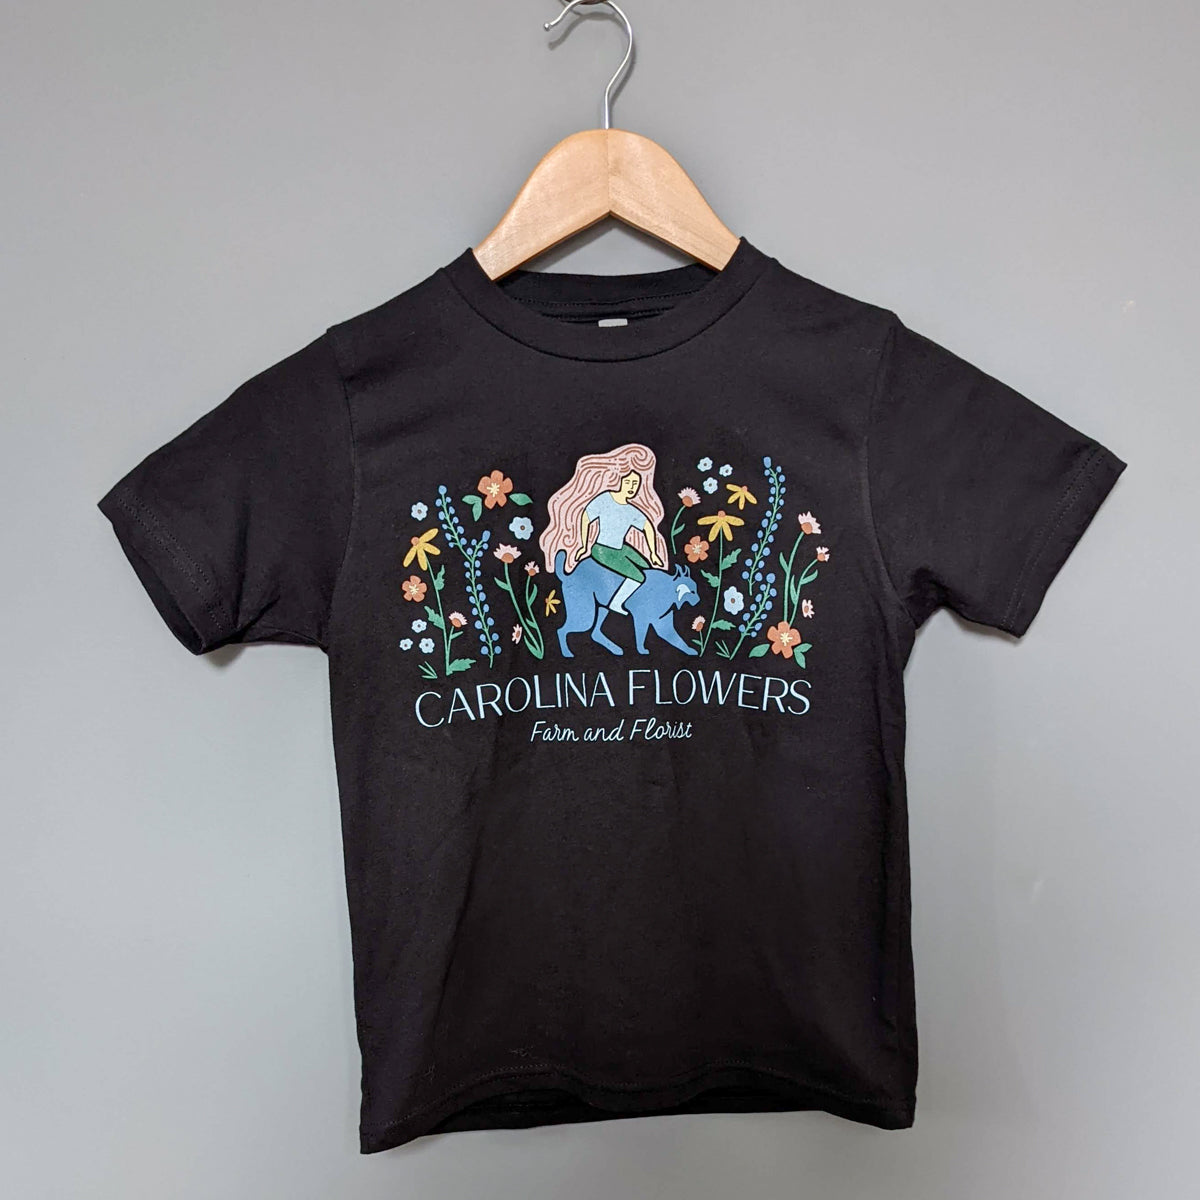 Kids Black T-Shirt with Carolina Flowers Logo